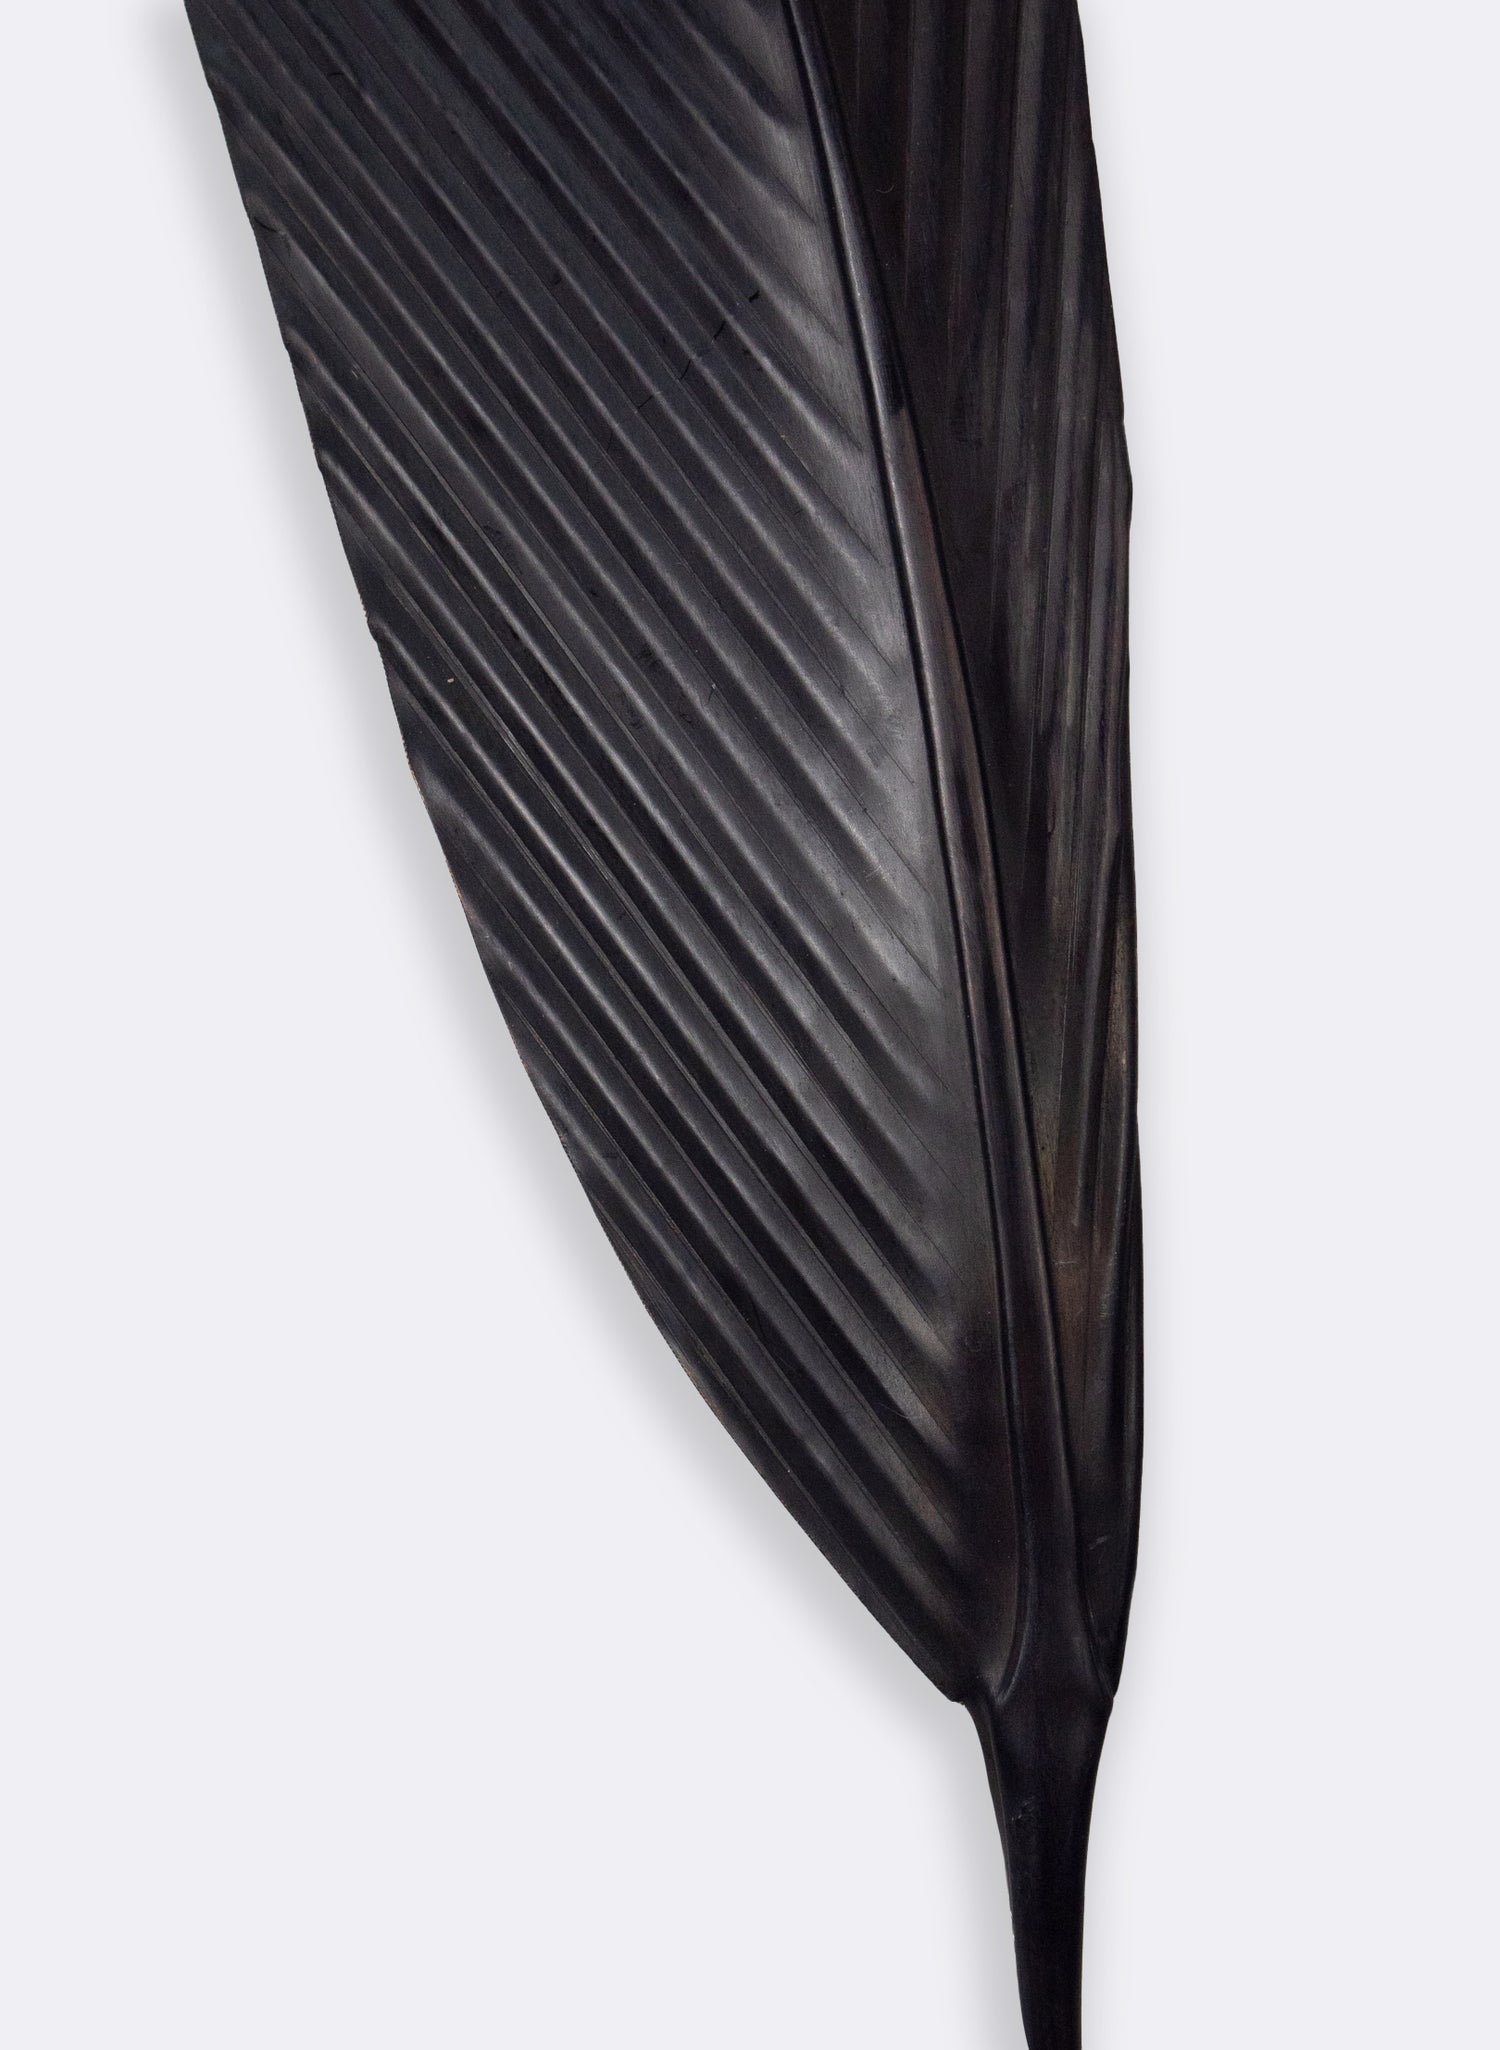 Tui Feather Copper 645mm